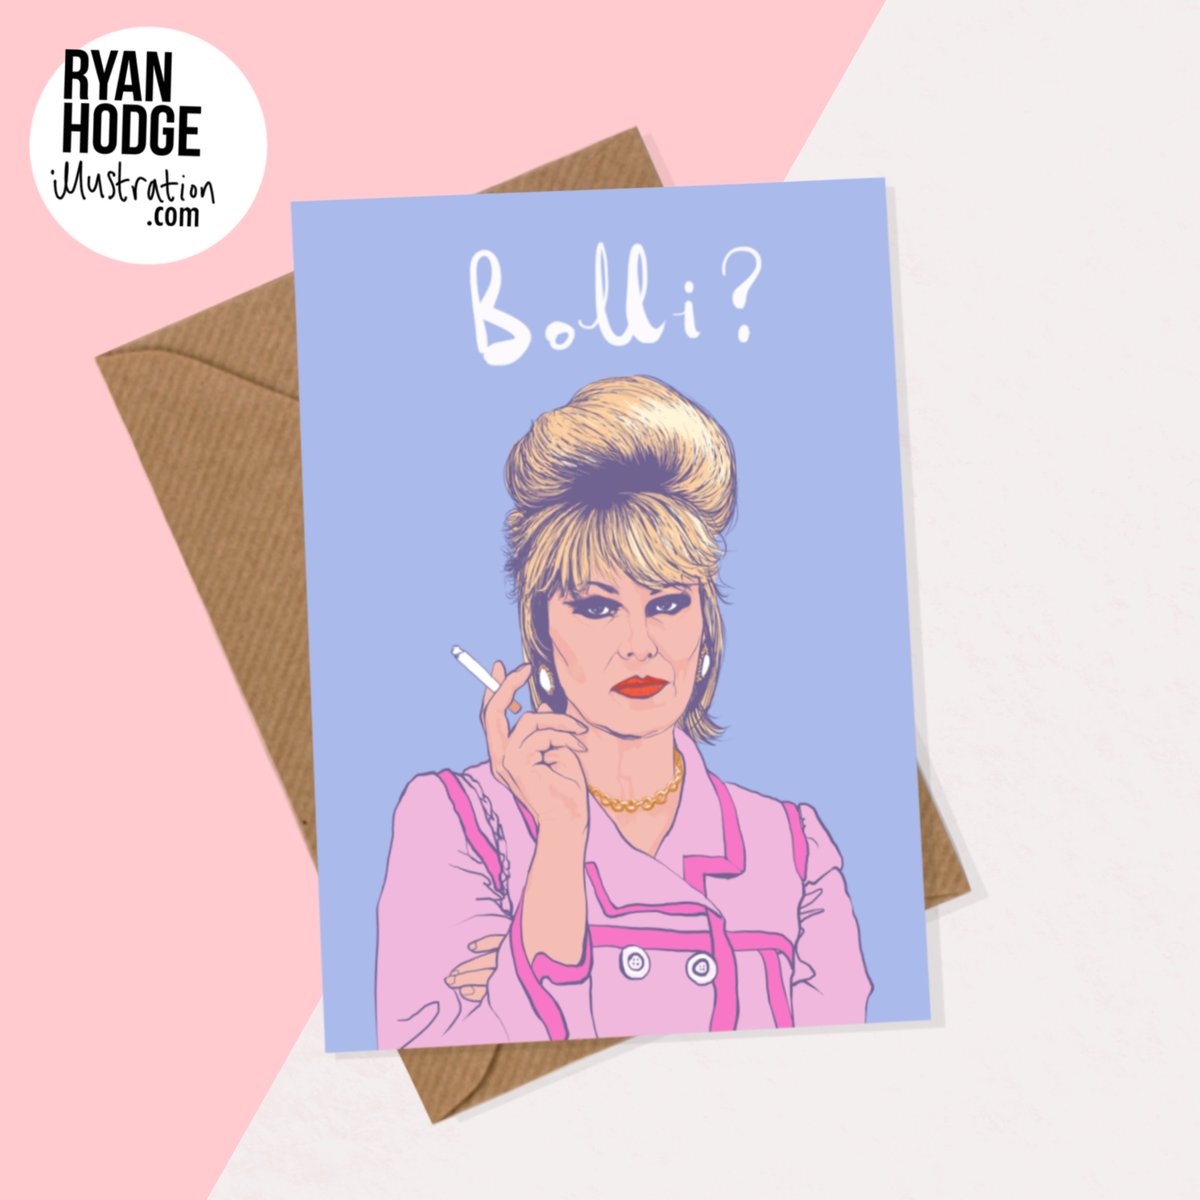 Buy my Absolutely Fabulous Patsy Stone Greetings Card NOW!  Bolli, anyone? etsy.me/3l9CnUV via @Etsy #patsystone #greetingcard #birtdaycard #illustration #etsy #etsystore #abfab #bolli #birthday #bestfriend